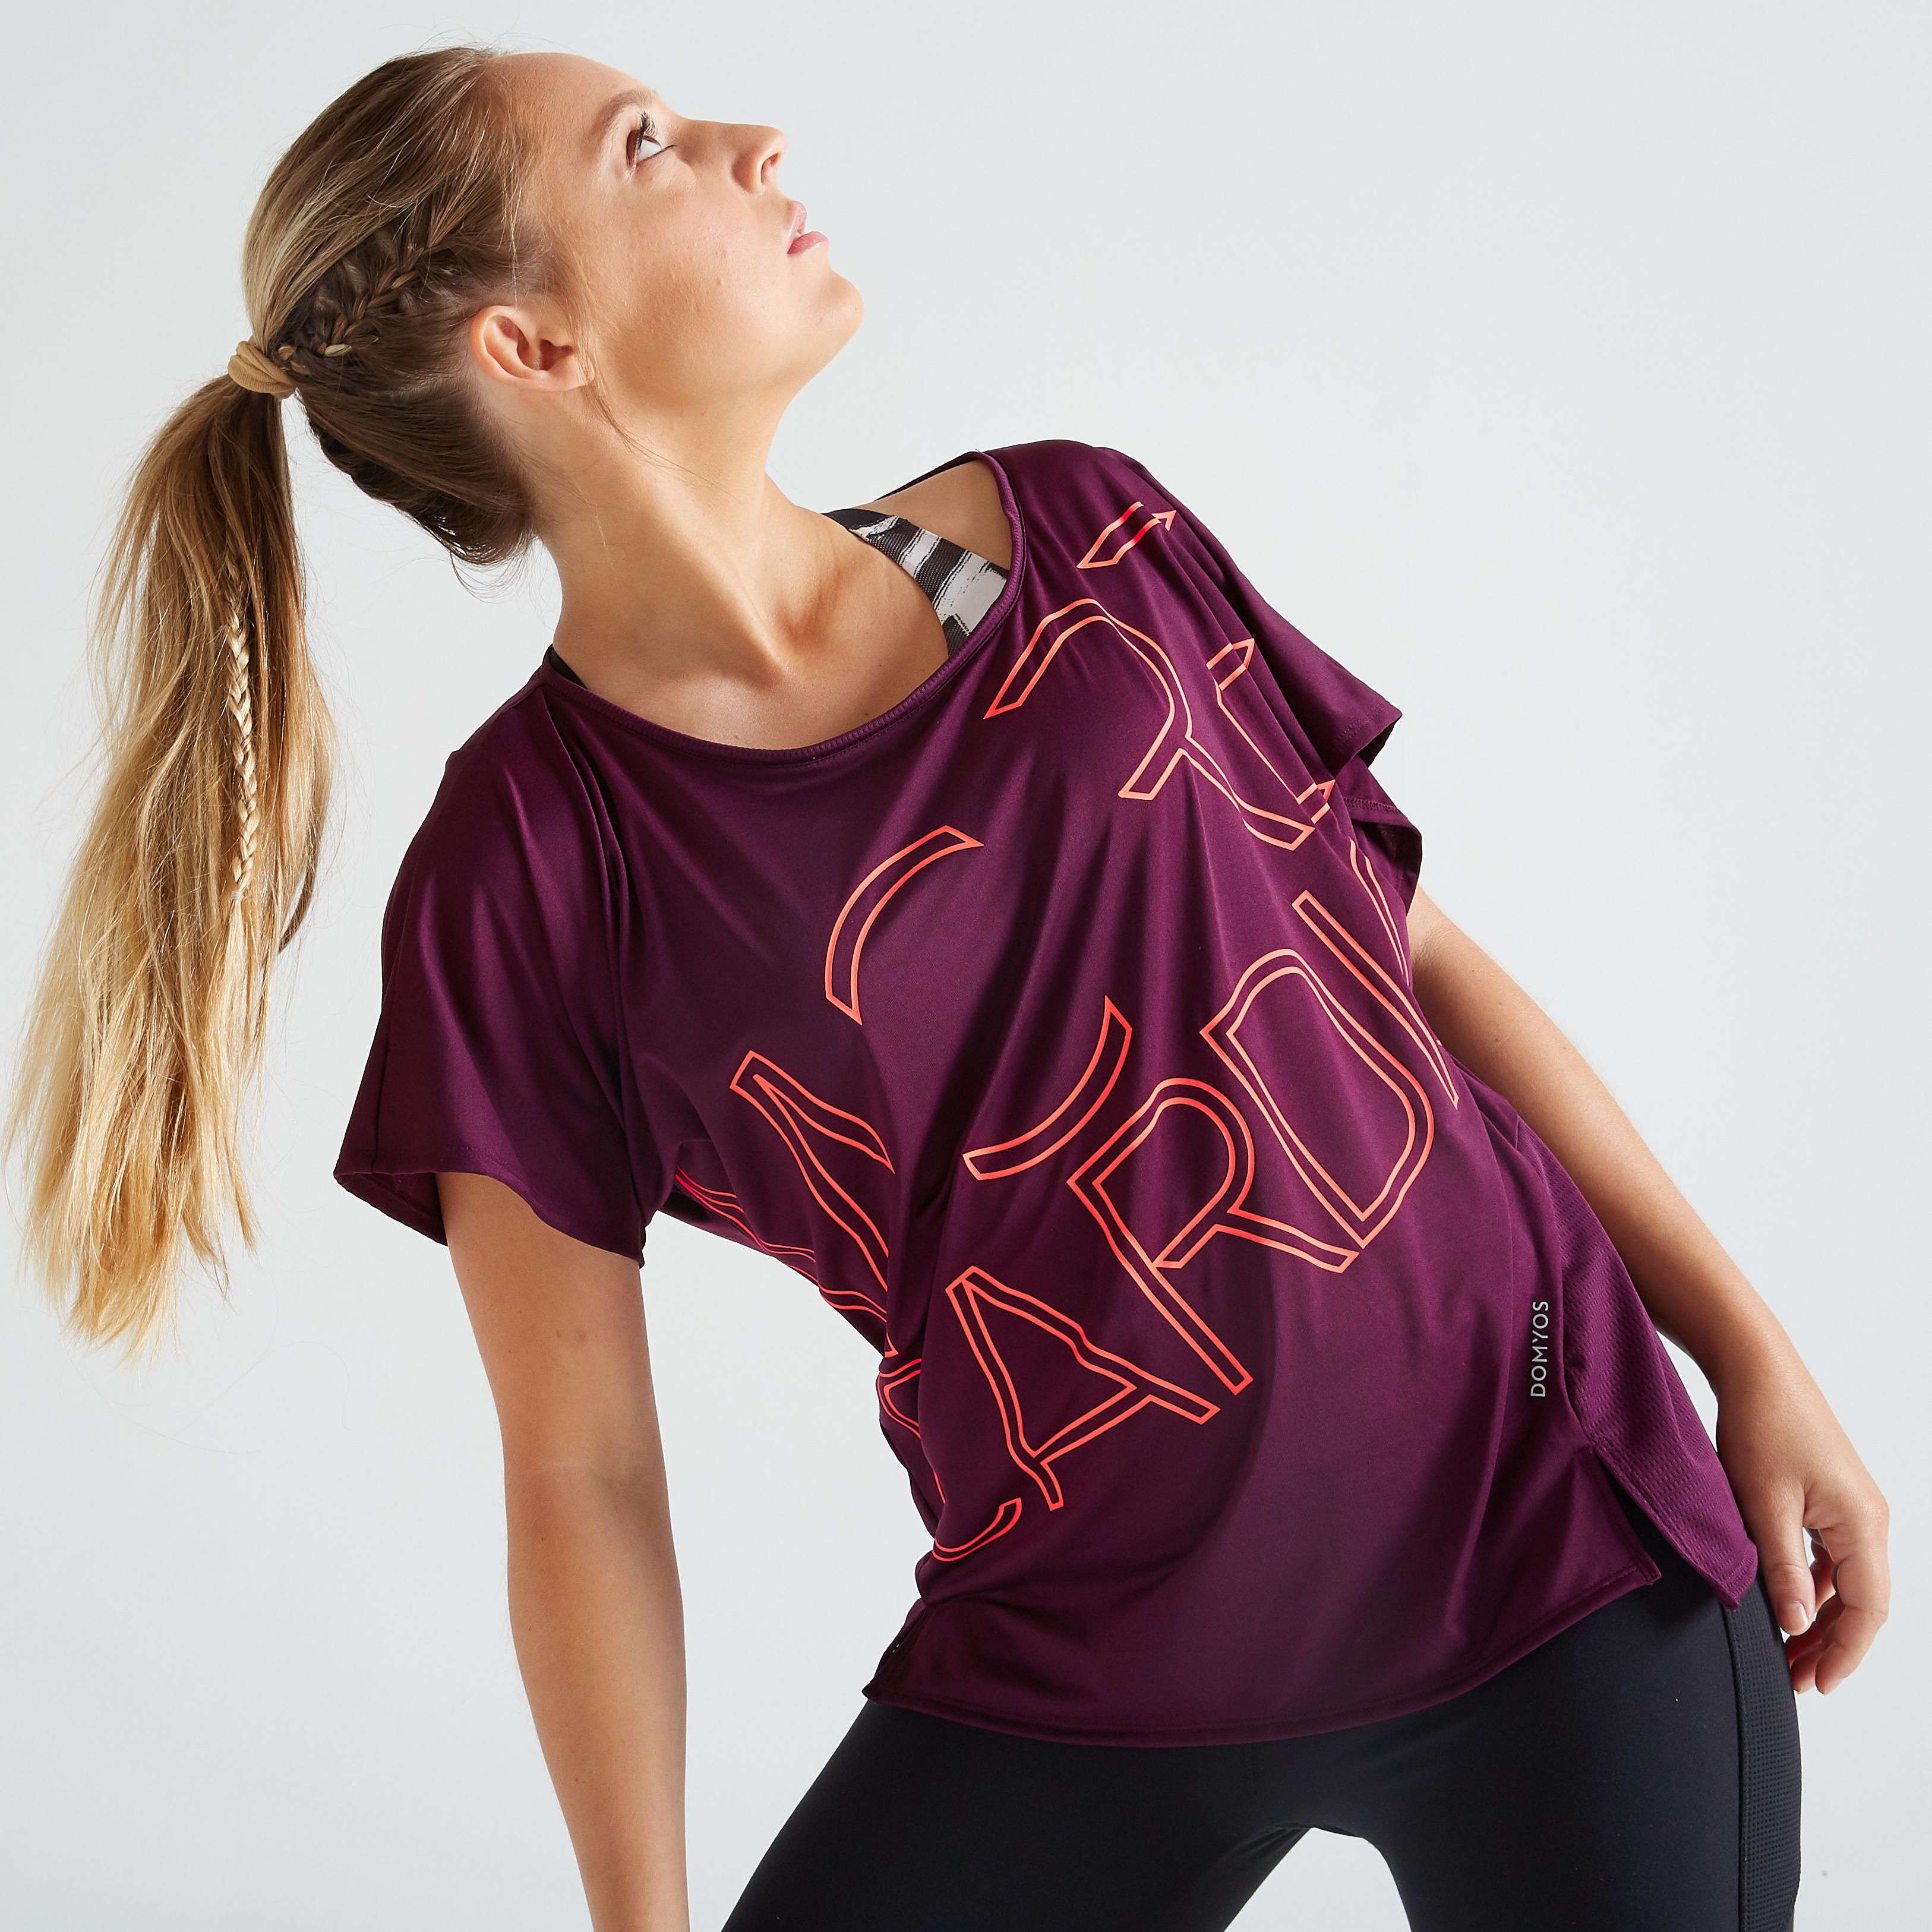 camisetas fitness mujer baratas baratas online